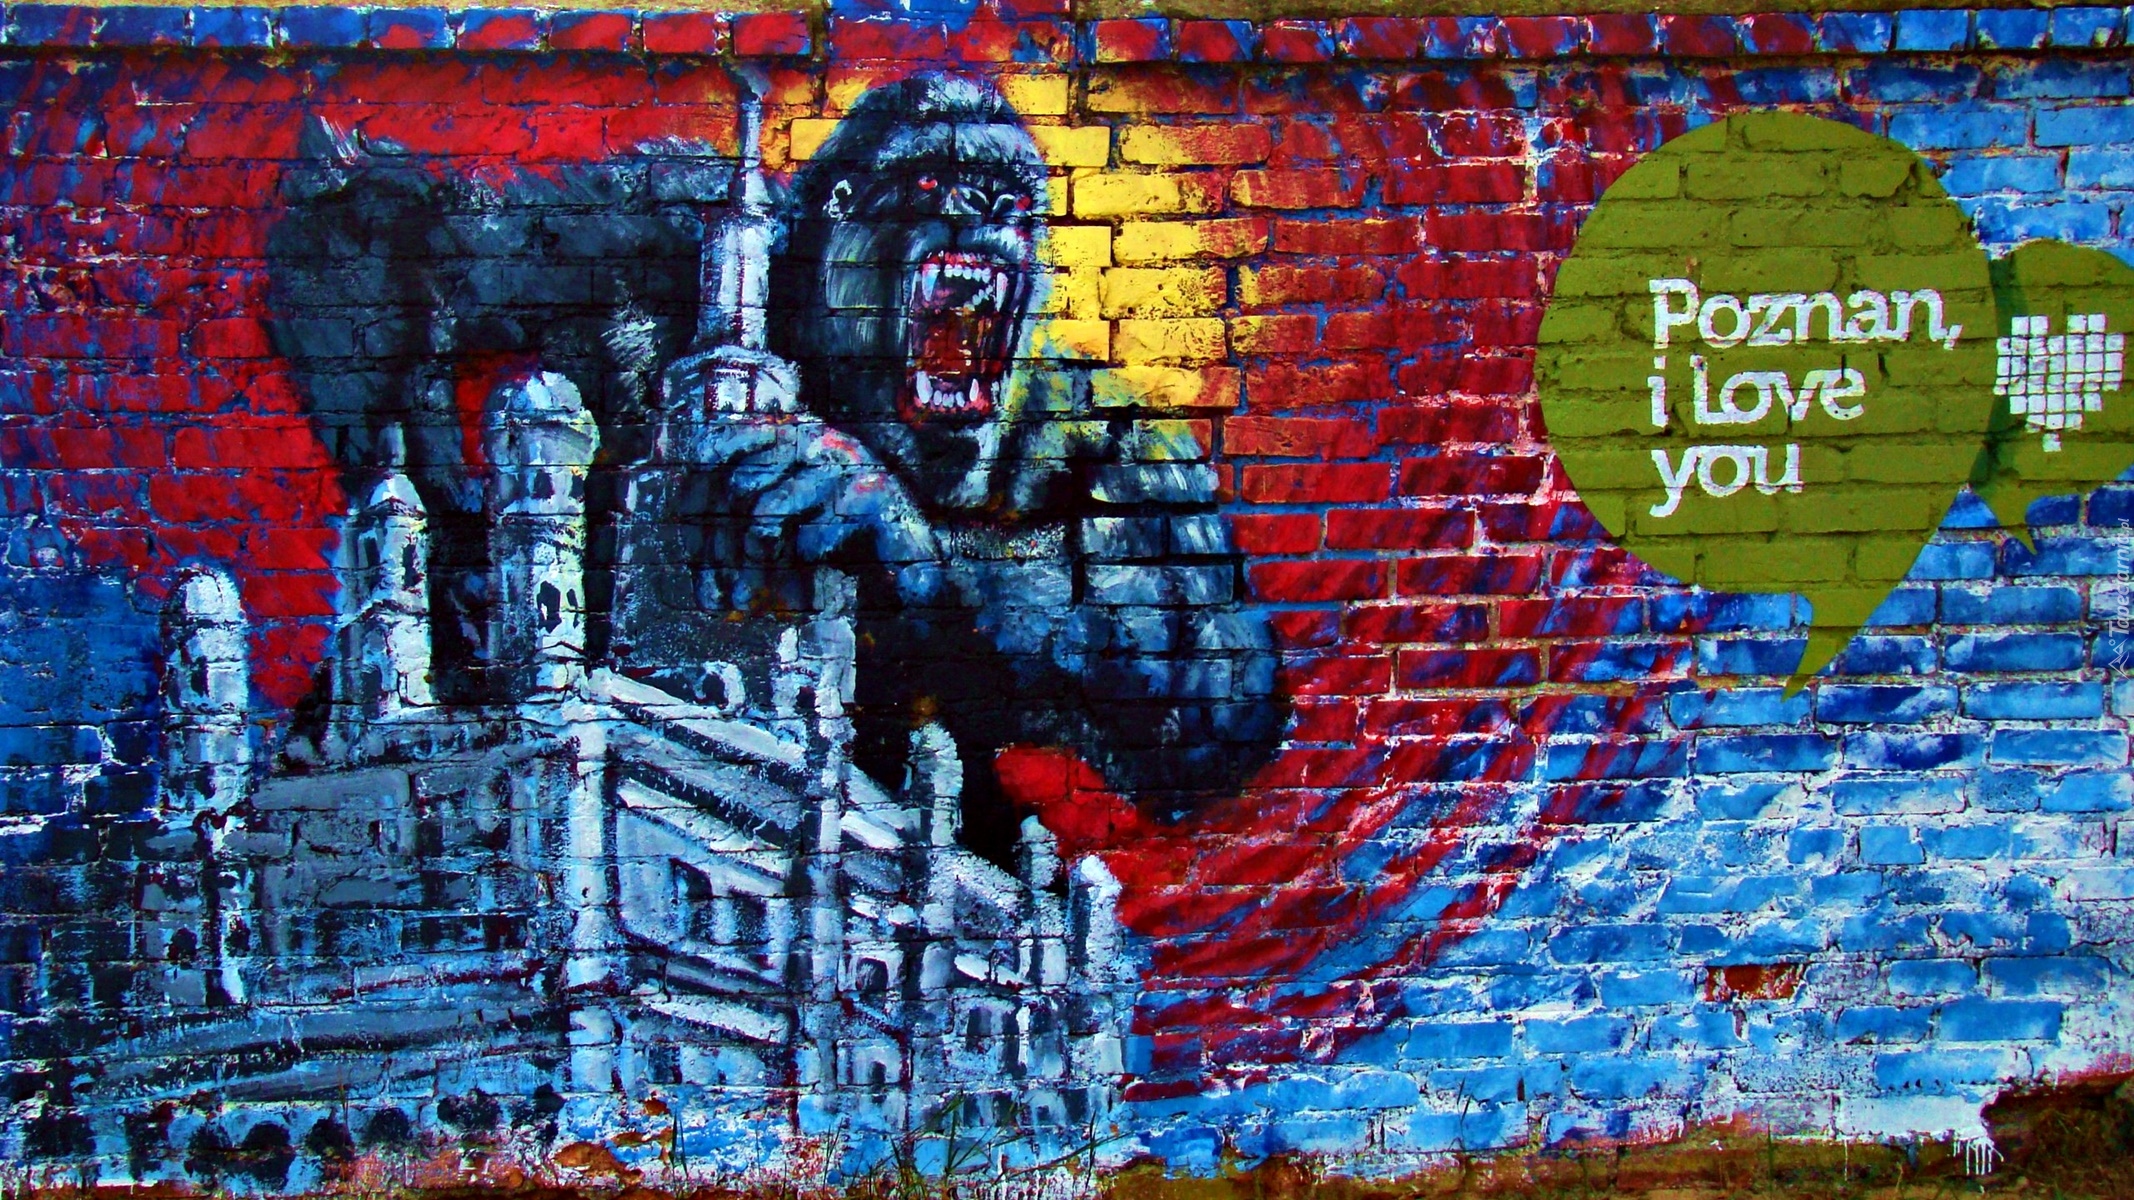 Mural, Ściana, King Kong, Napis, Street art